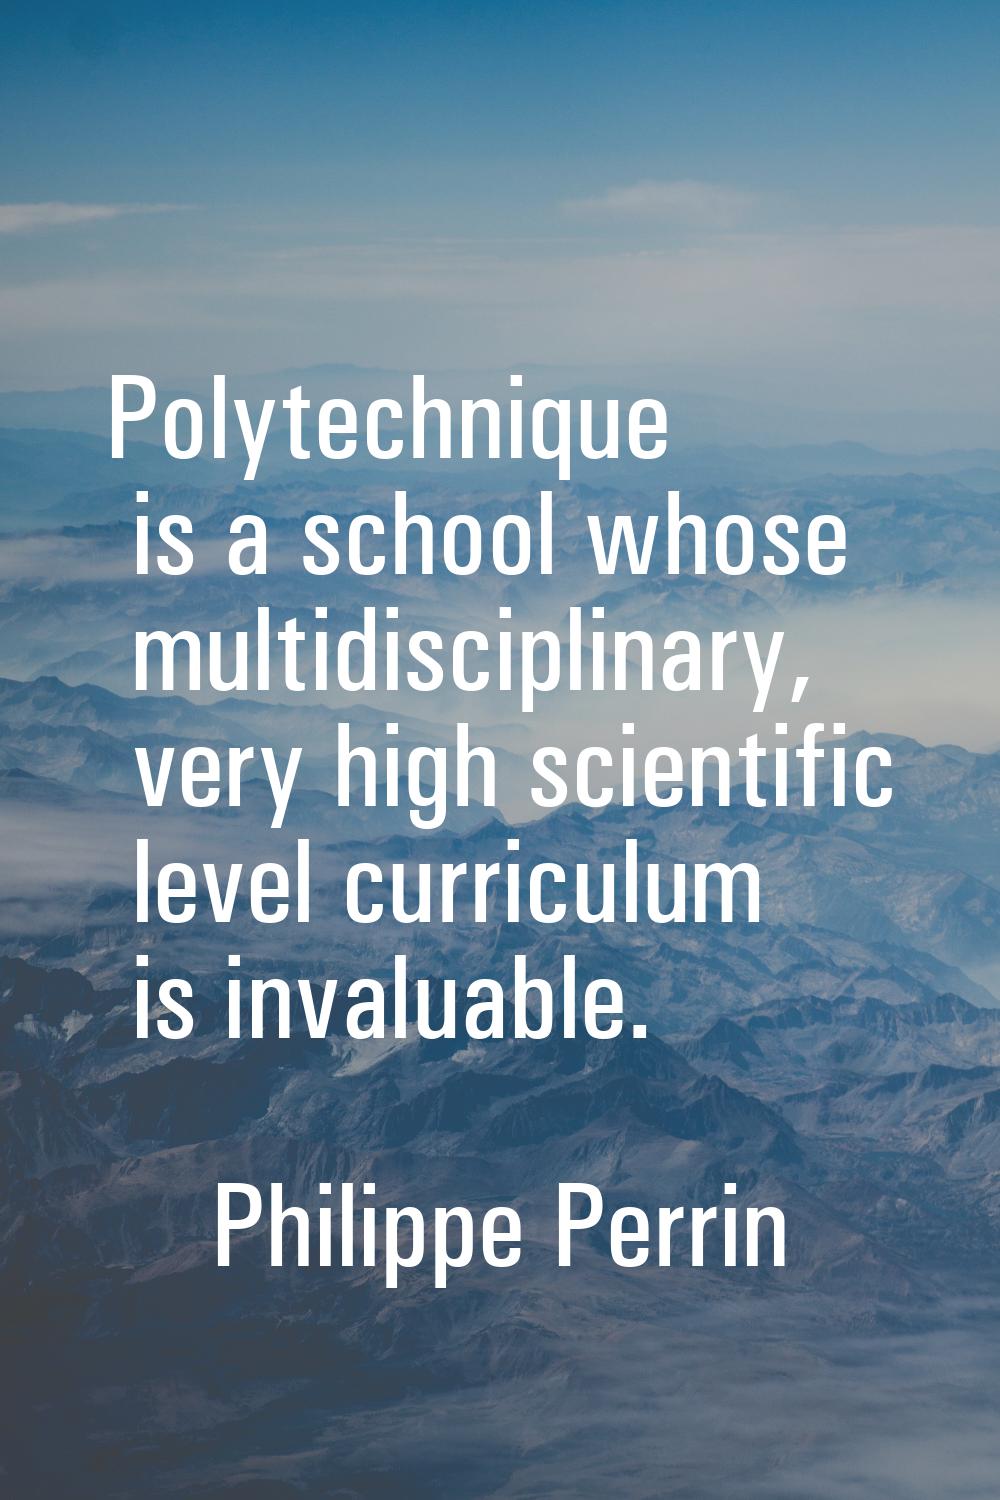 Polytechnique is a school whose multidisciplinary, very high scientific level curriculum is invalua